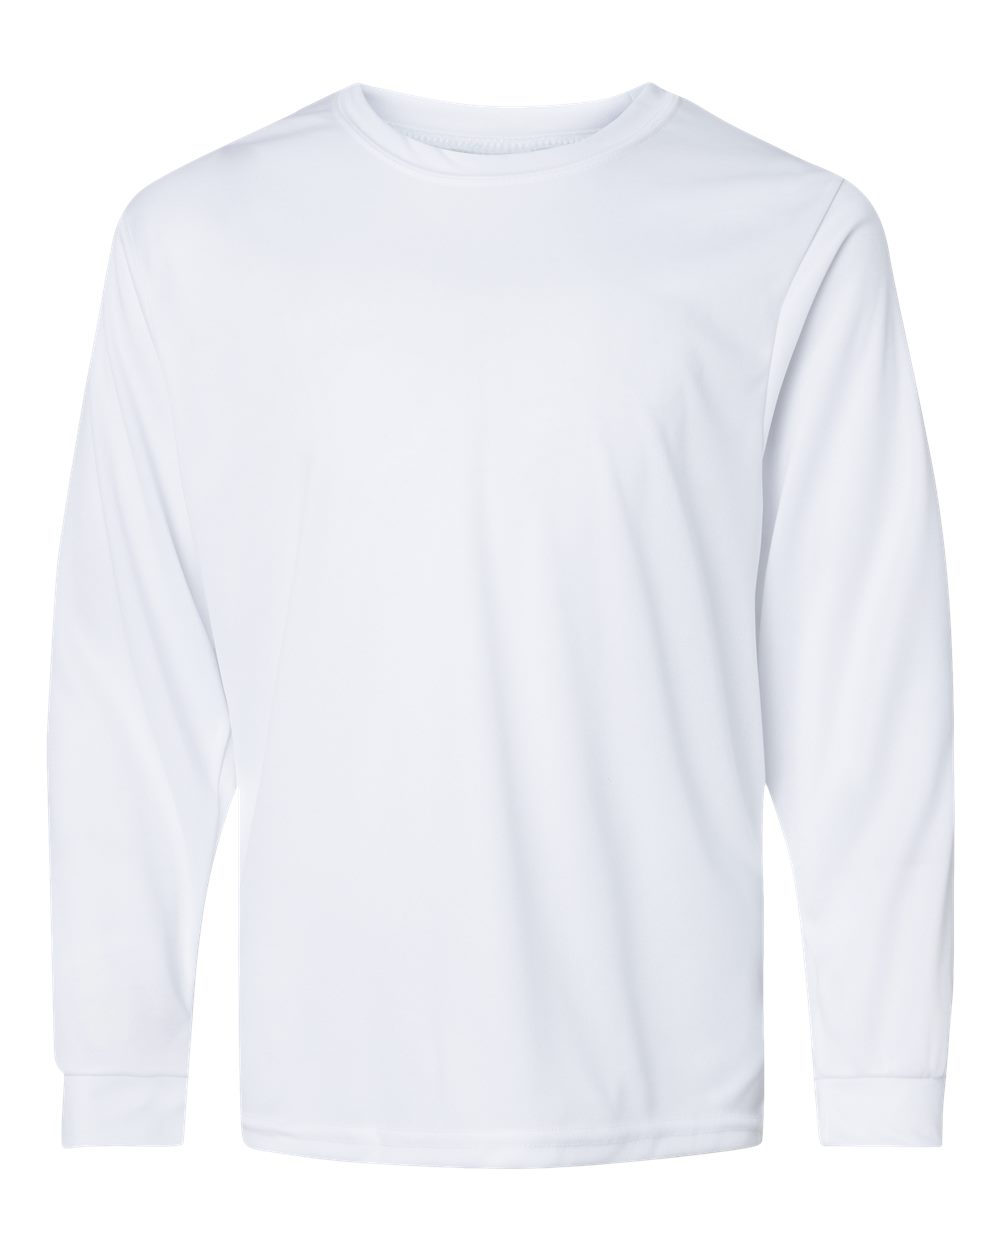 Youth Performance Long Sleeve T-Shirt - 5204-C2 Sport